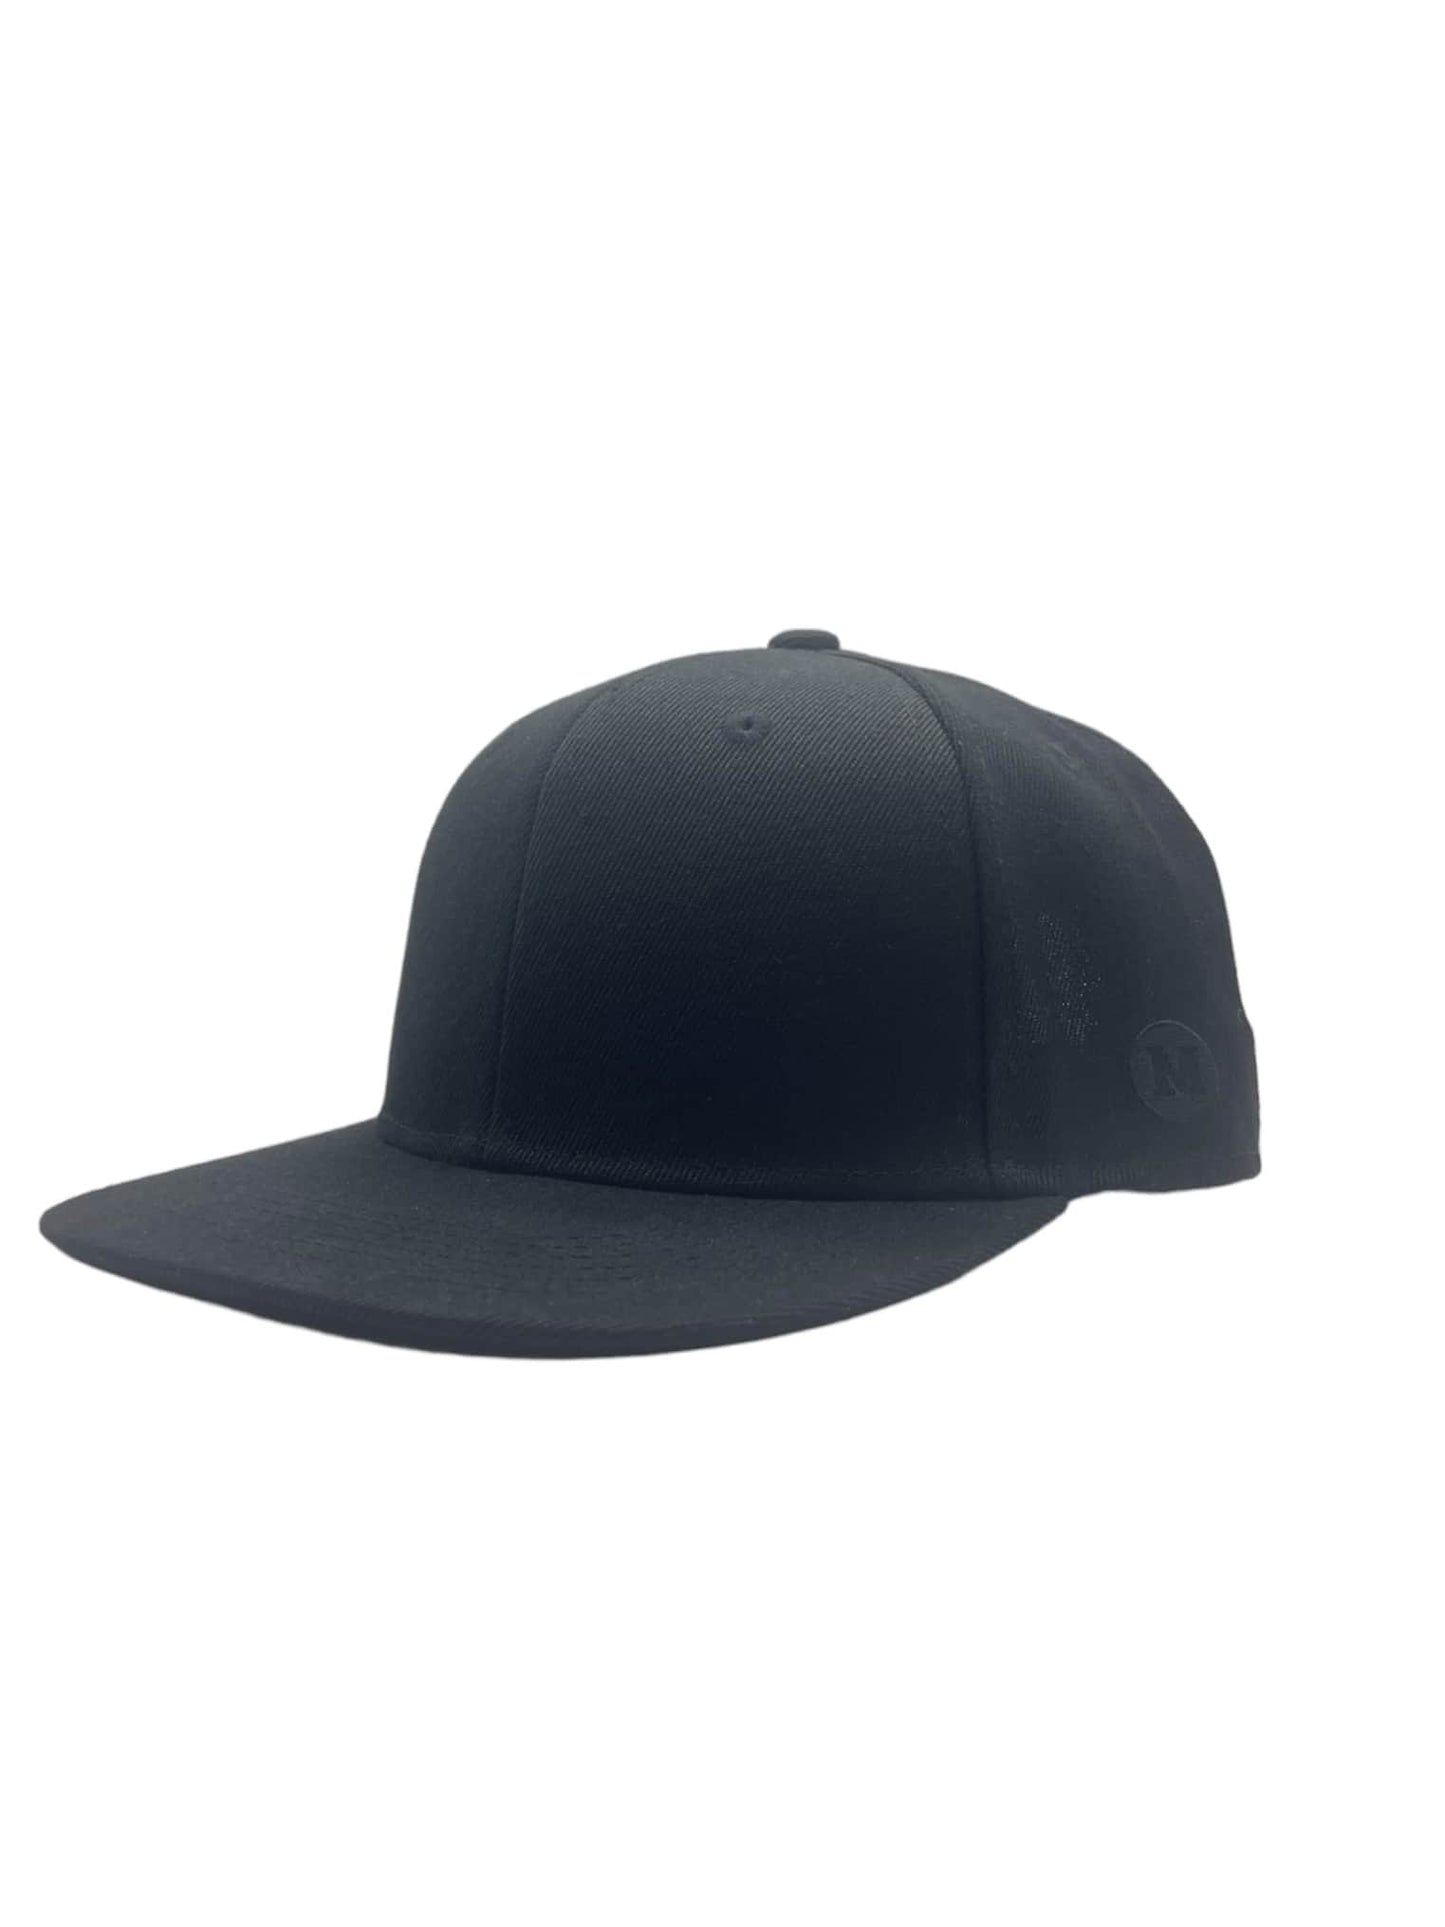 Big Headed Blank Hats Snapbacks / Flexfits